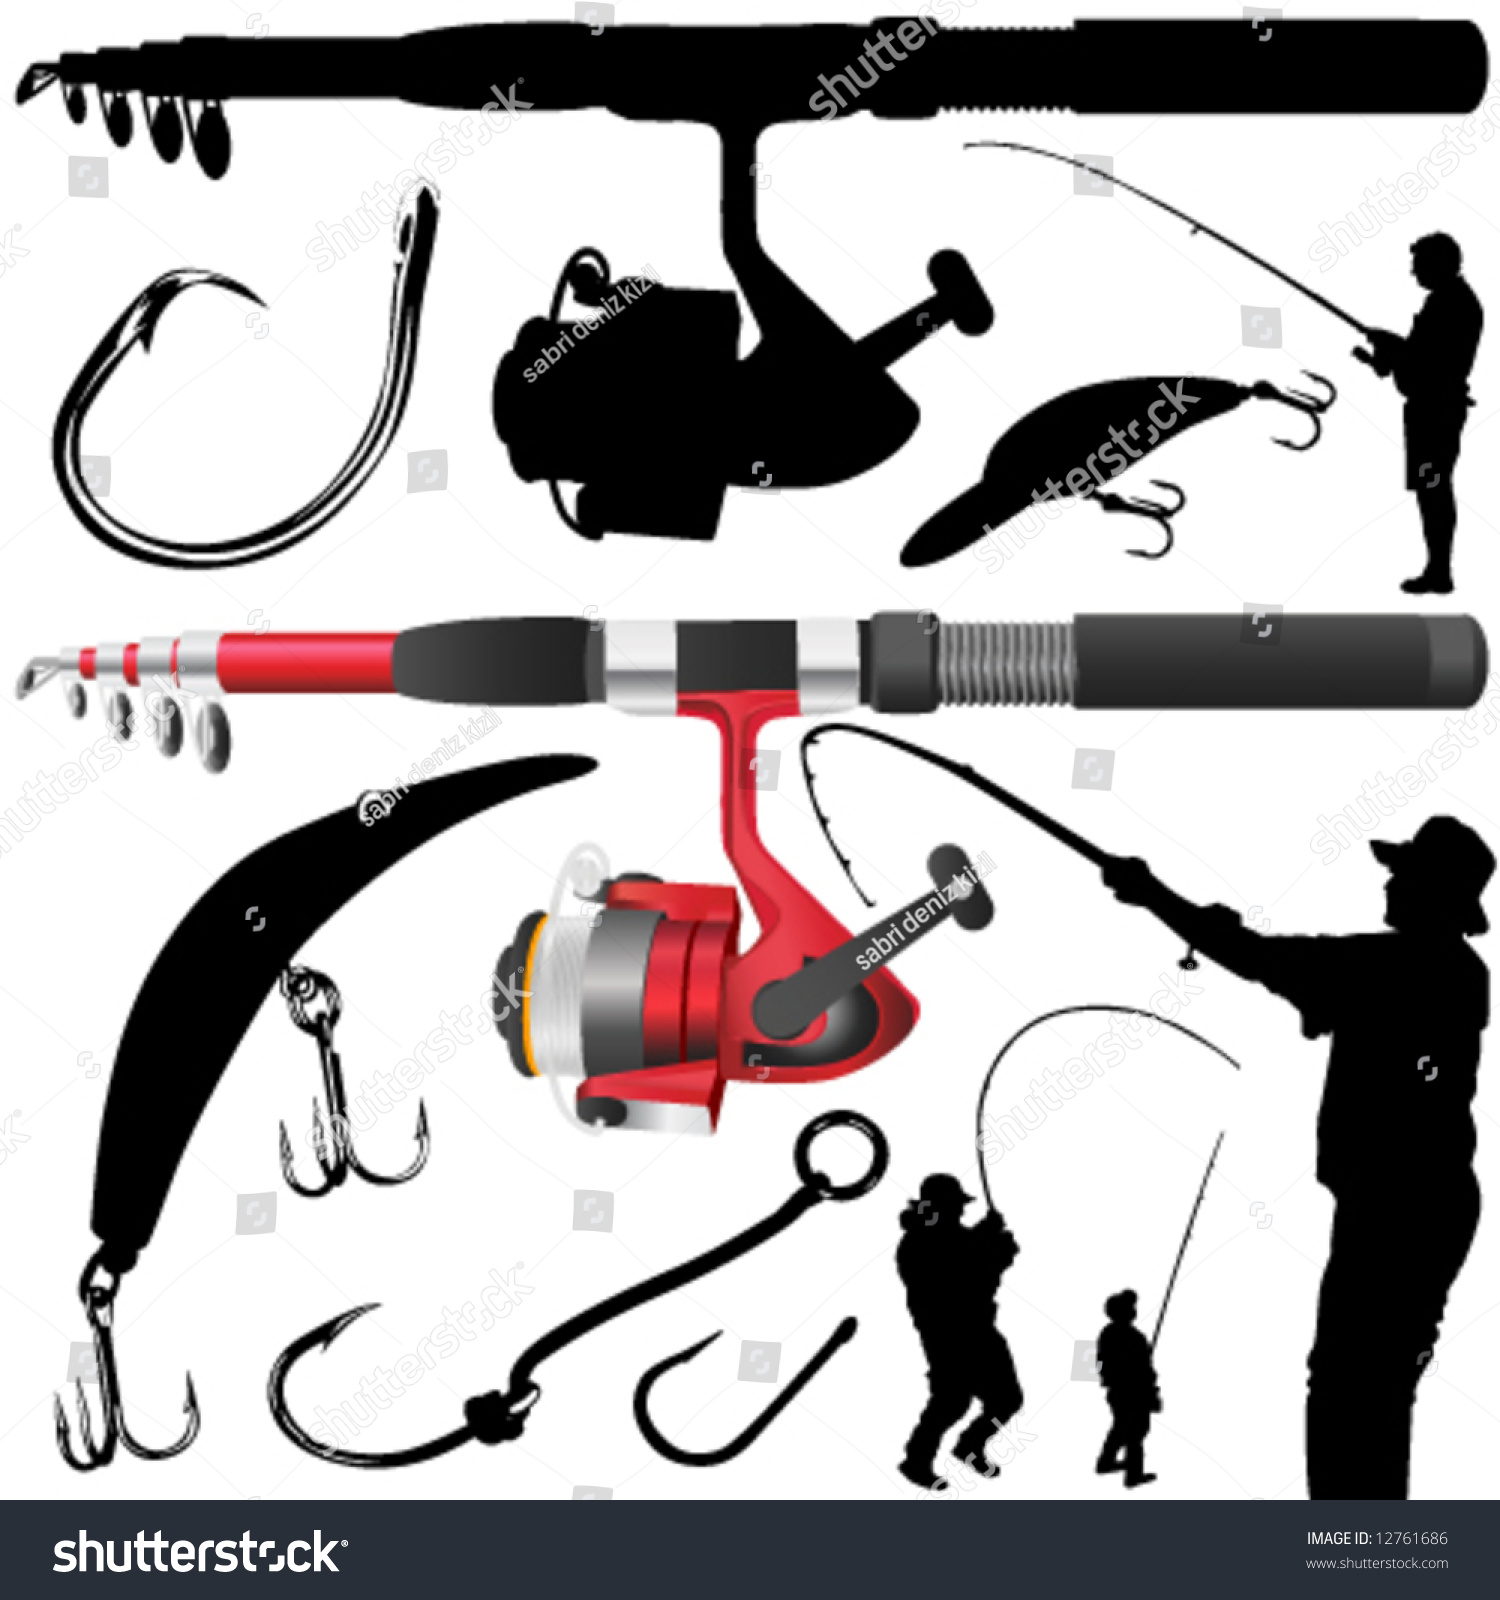 Fishing Vector - 12761686 : Shutterstock